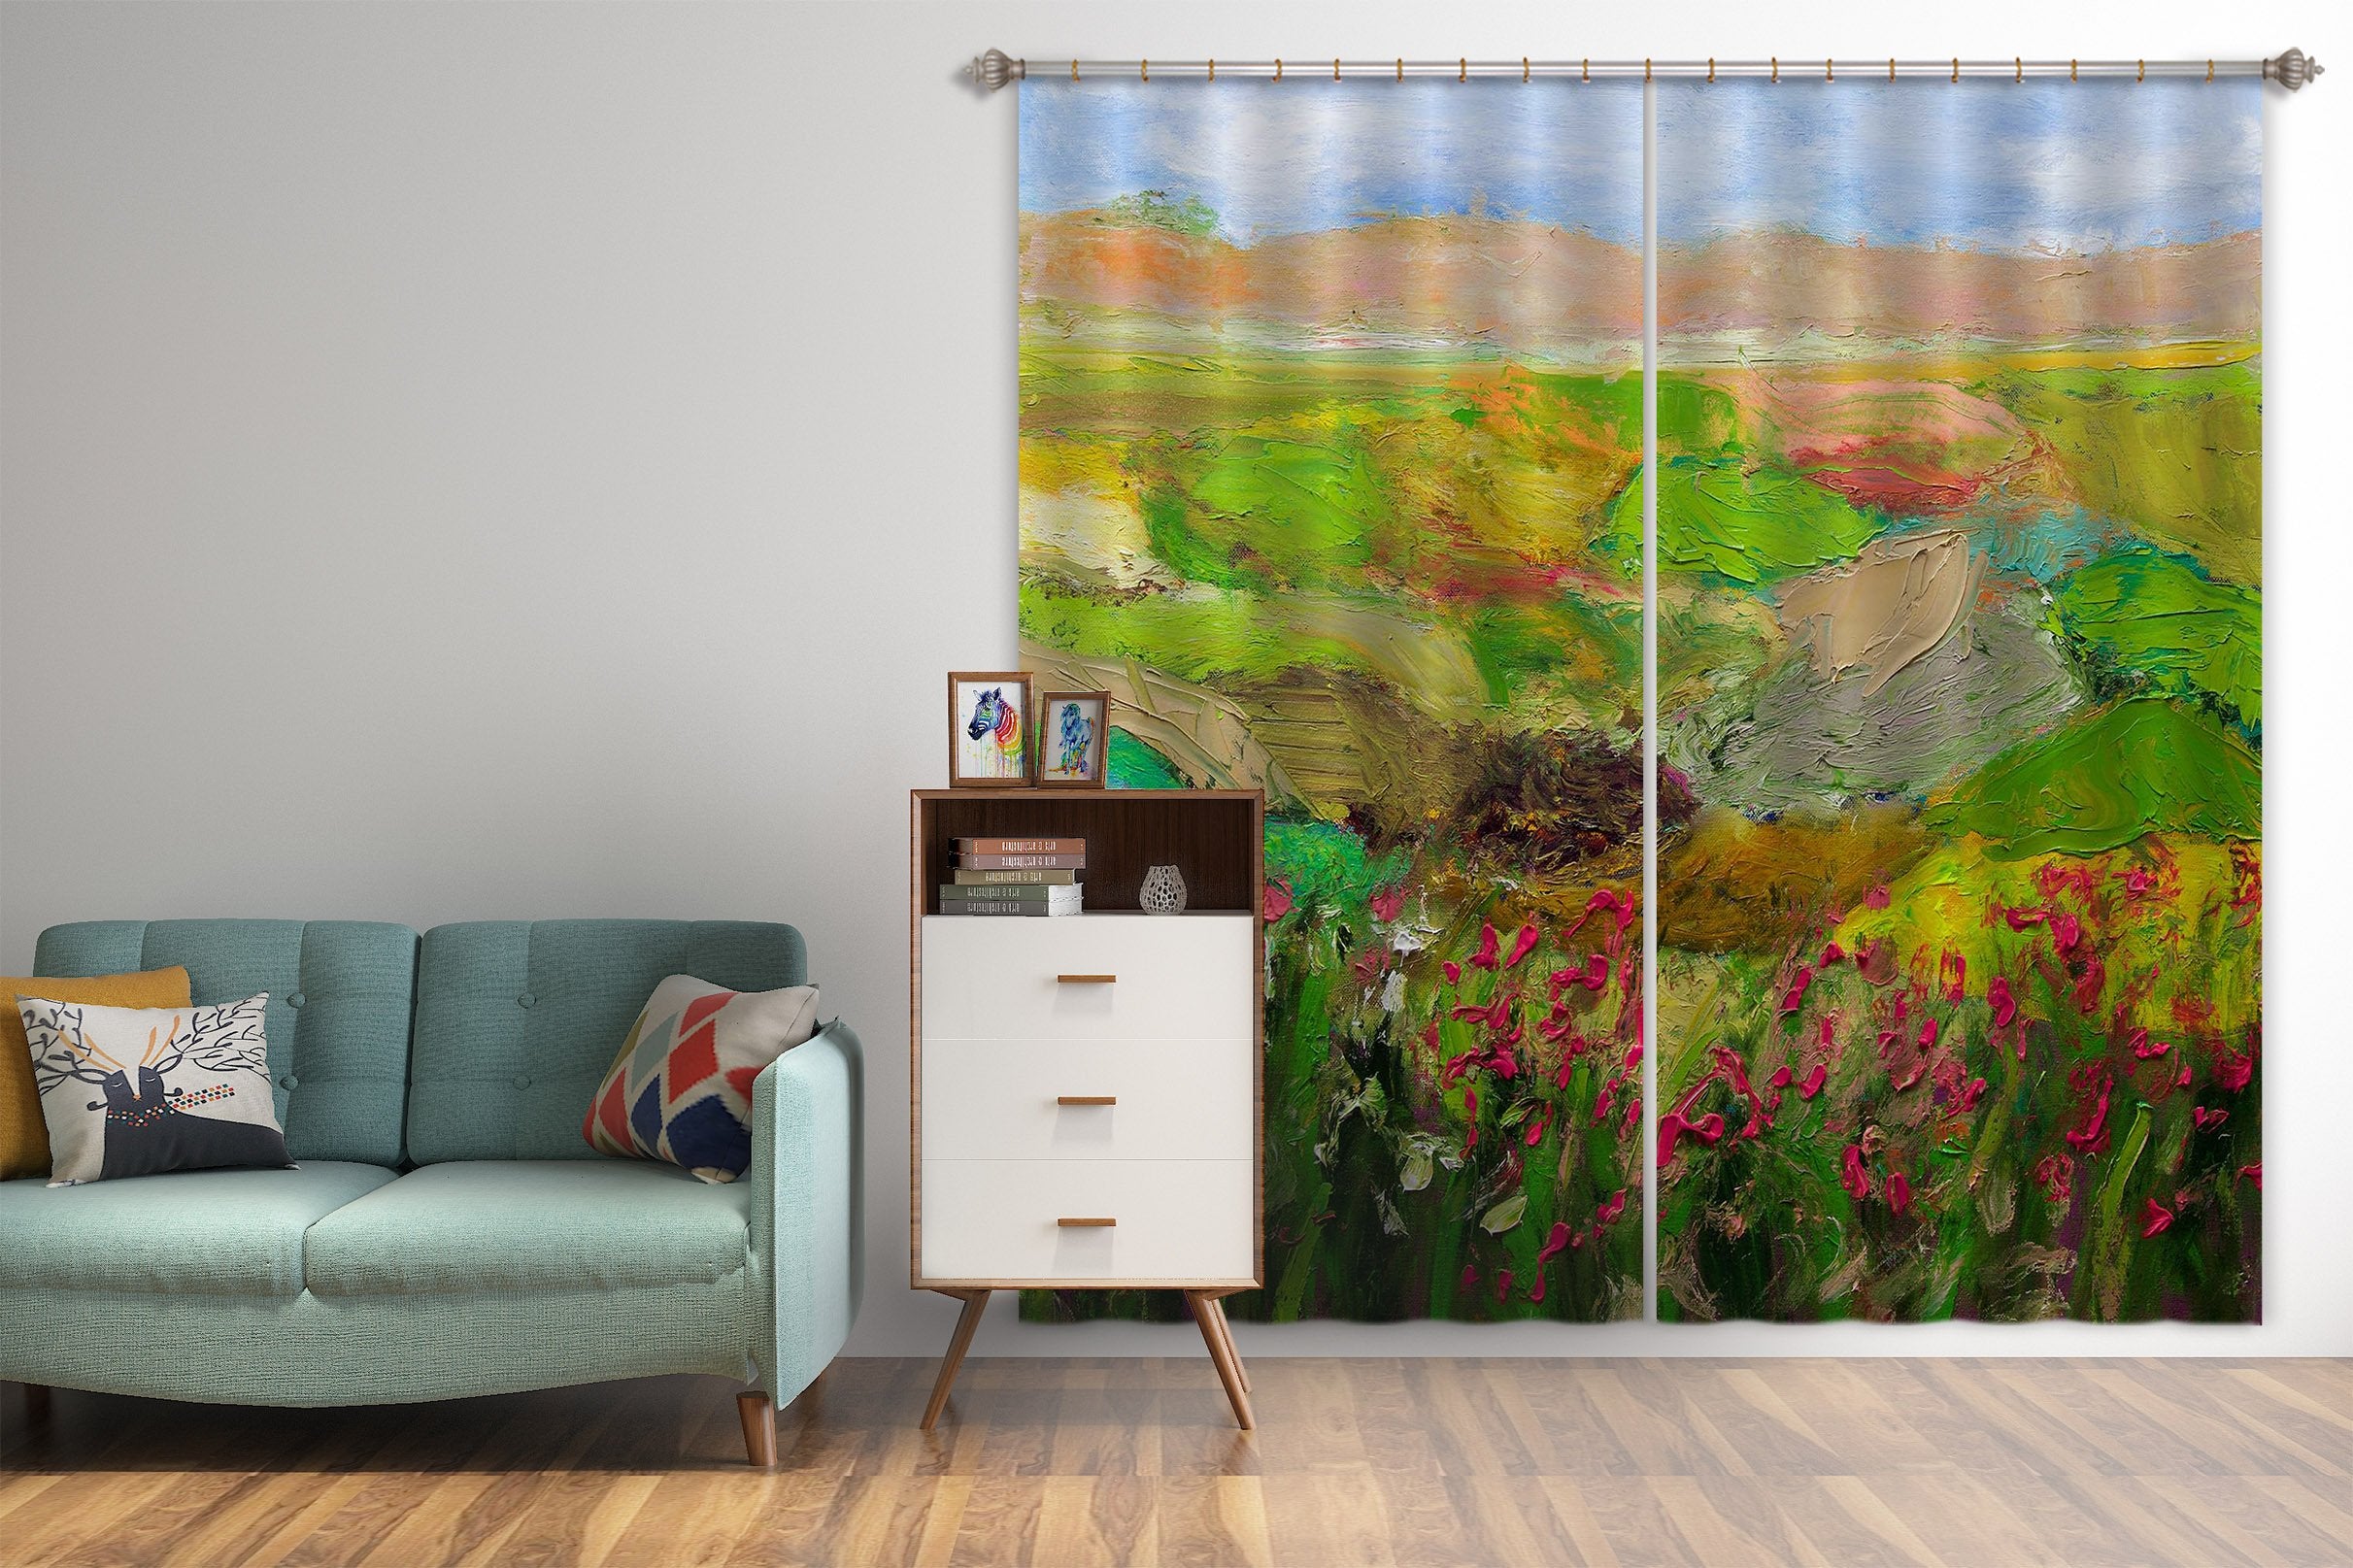 3D Abstract Painting 238 Allan P. Friedlander Curtain Curtains Drapes Wallpaper AJ Wallpaper 